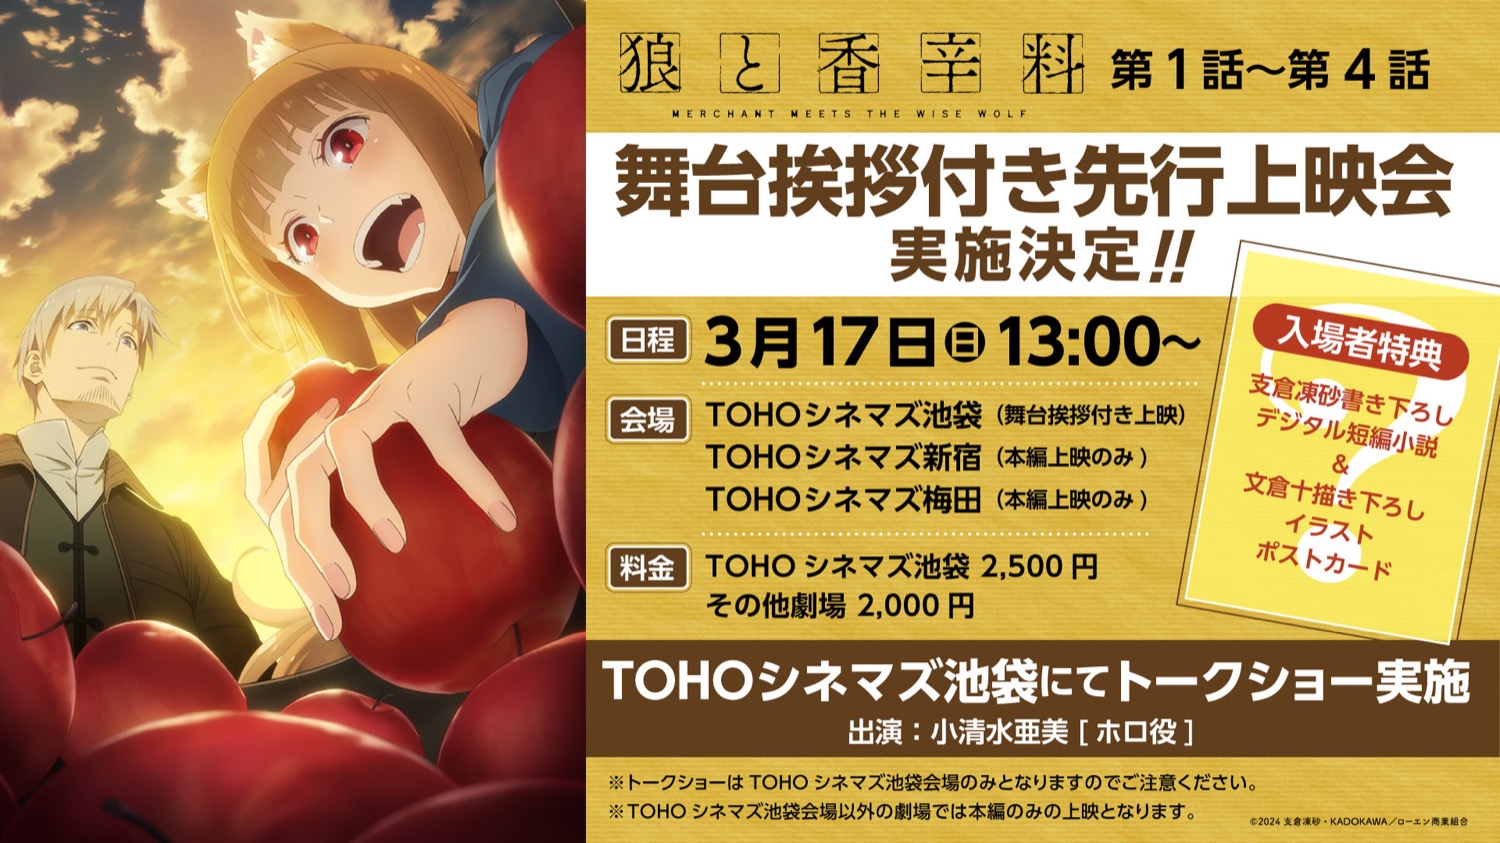 TVアニメ「狼と香辛料」3月17日より 先行上映会実施決定! 入場特典も!